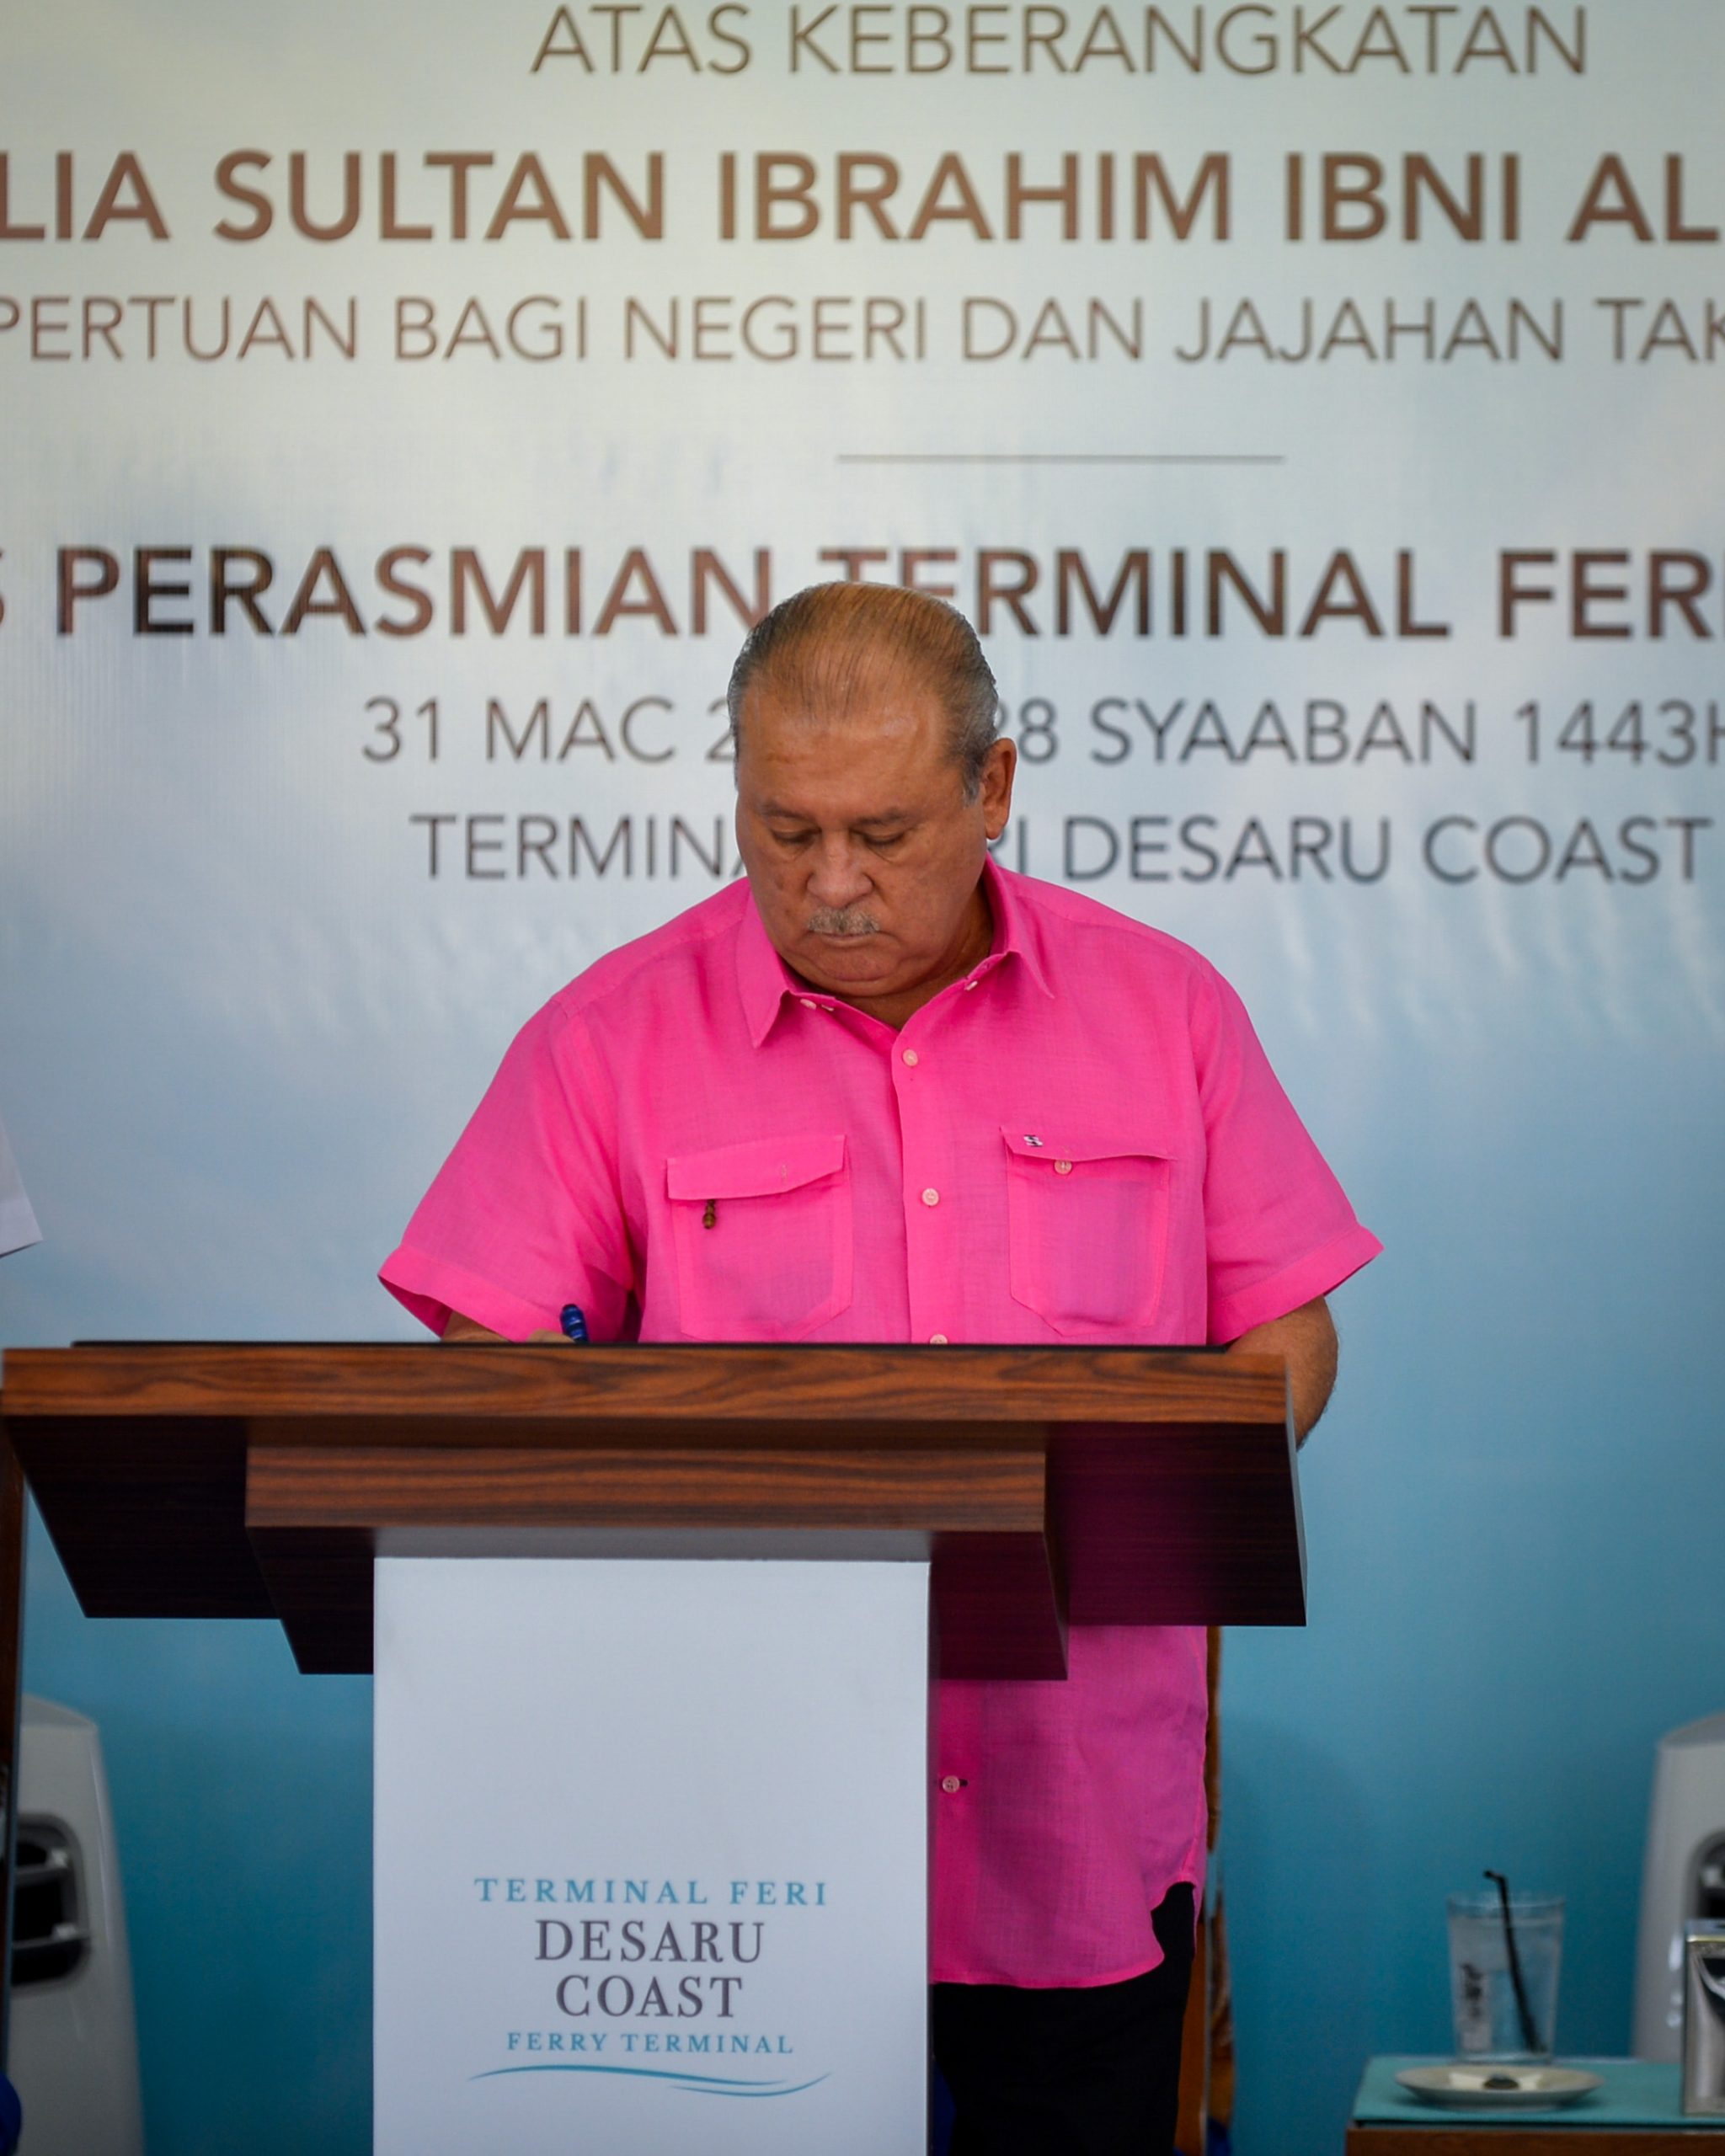 His Majesty Sultan Ibrahim Ibni Almarhum Sultan Iskandar, the Sultan of Johor officiating the Desaru Coast Ferry Terminal